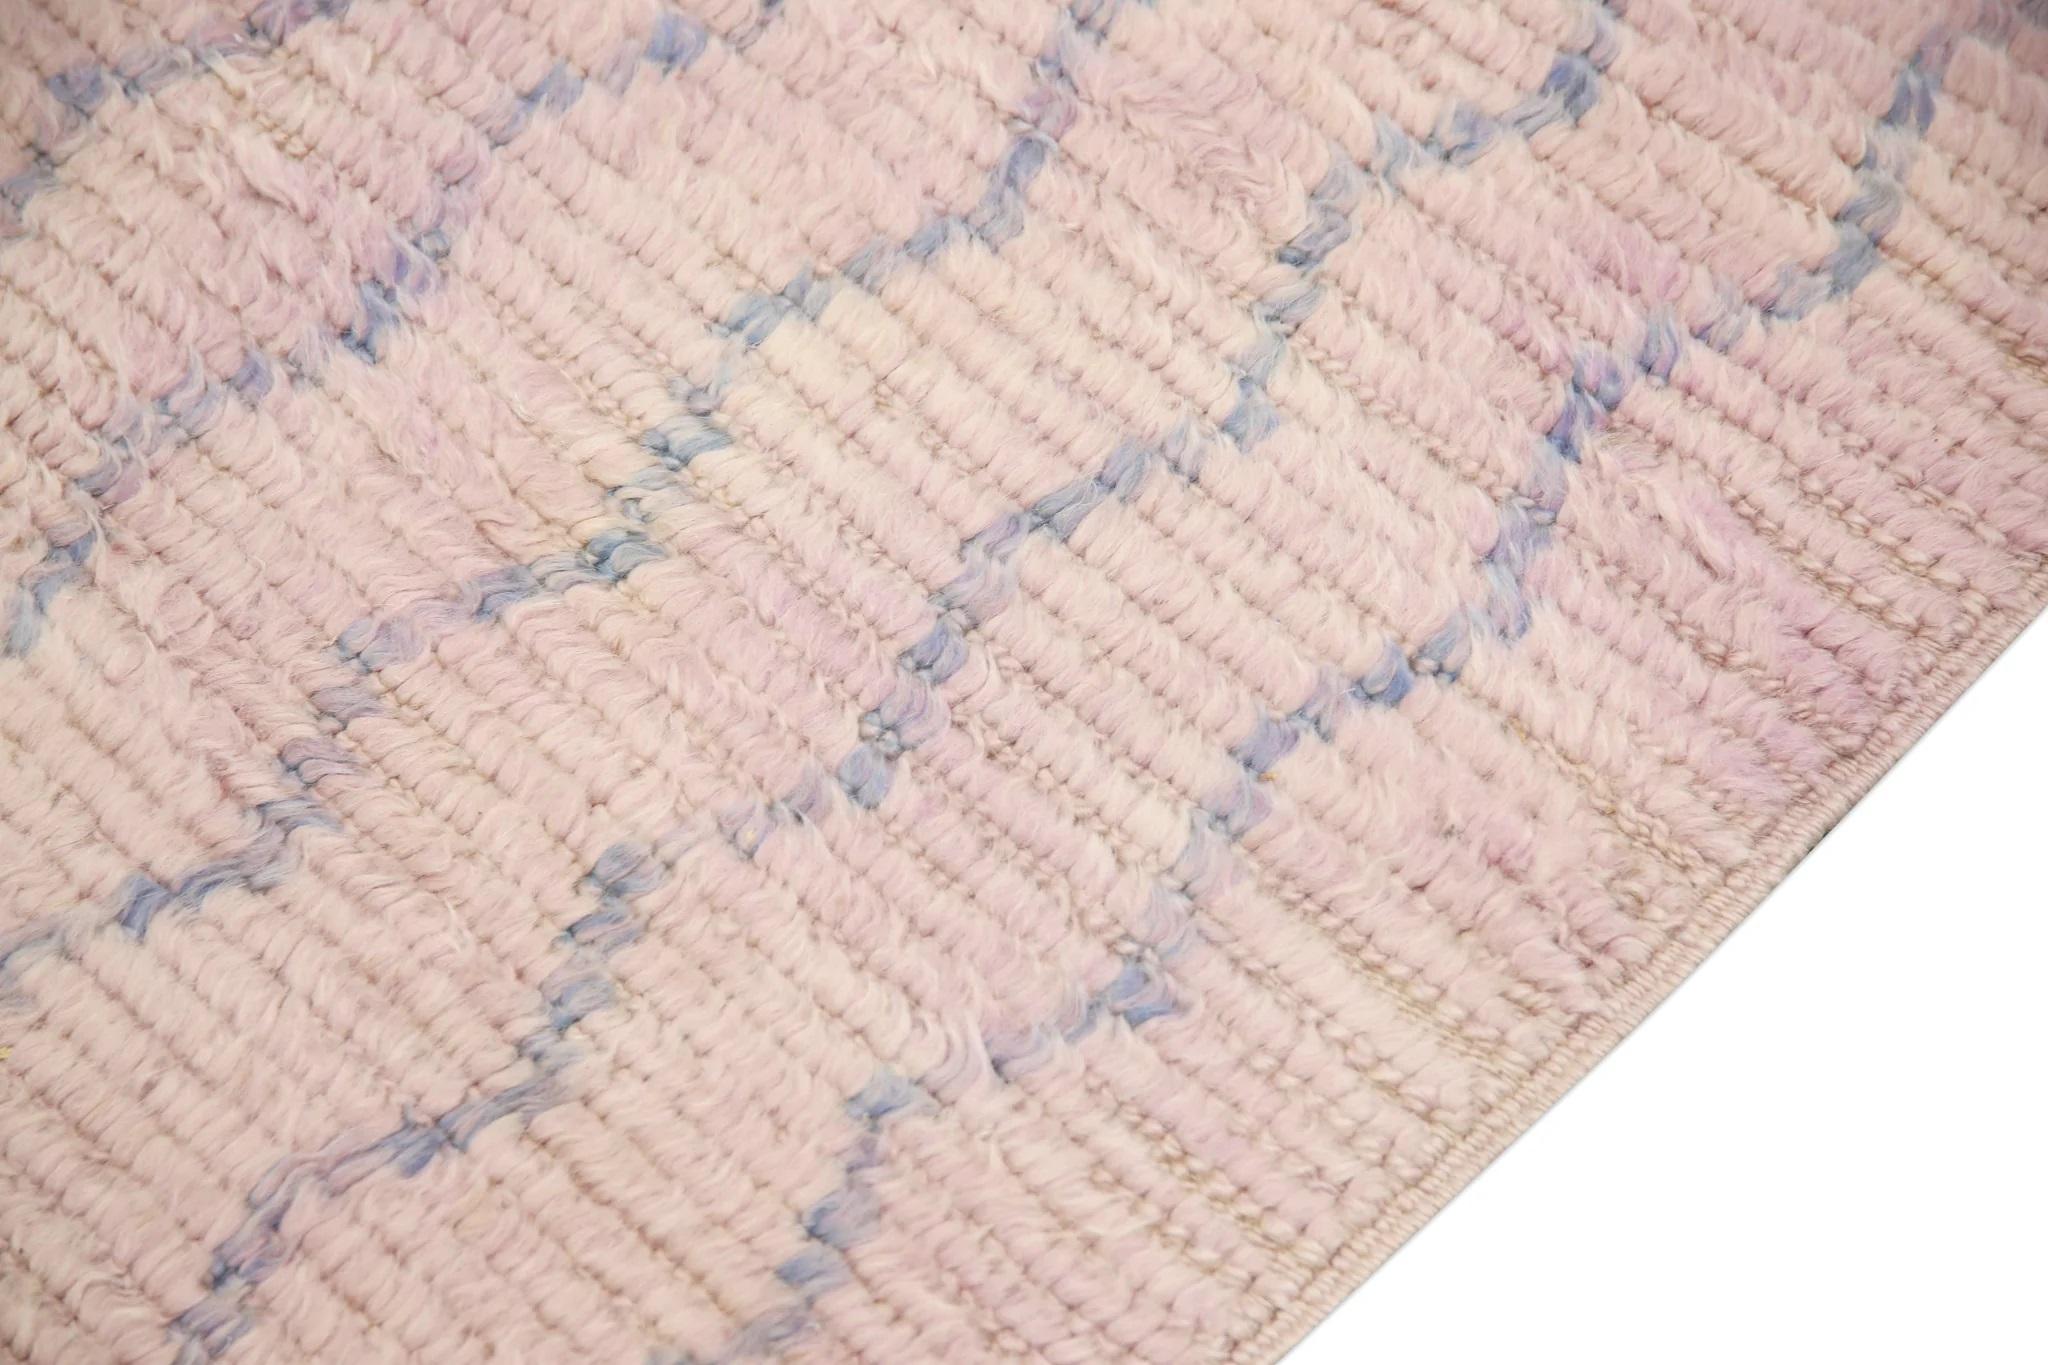 Modern Handmade Wool Tulu Runner in Pink and Blue Geometric Design 2'11